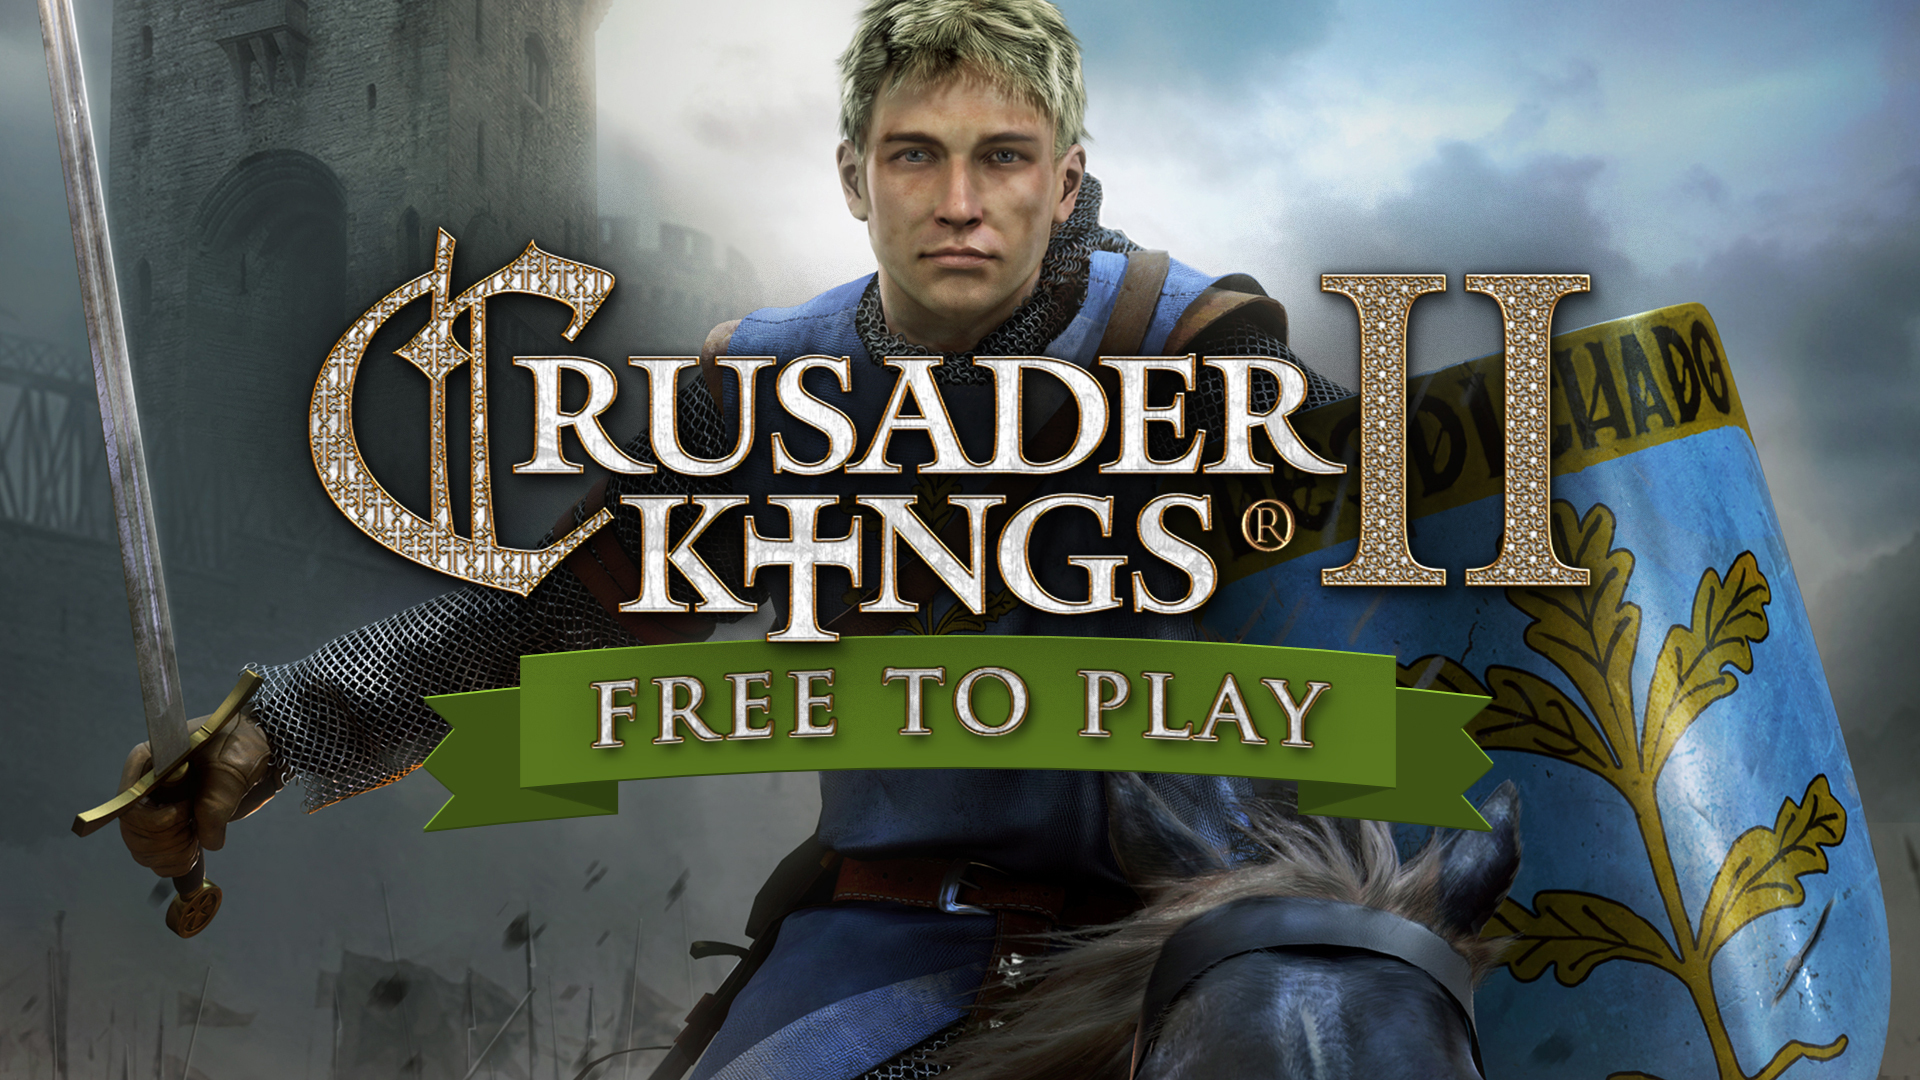 crusader kings 2 download free mac